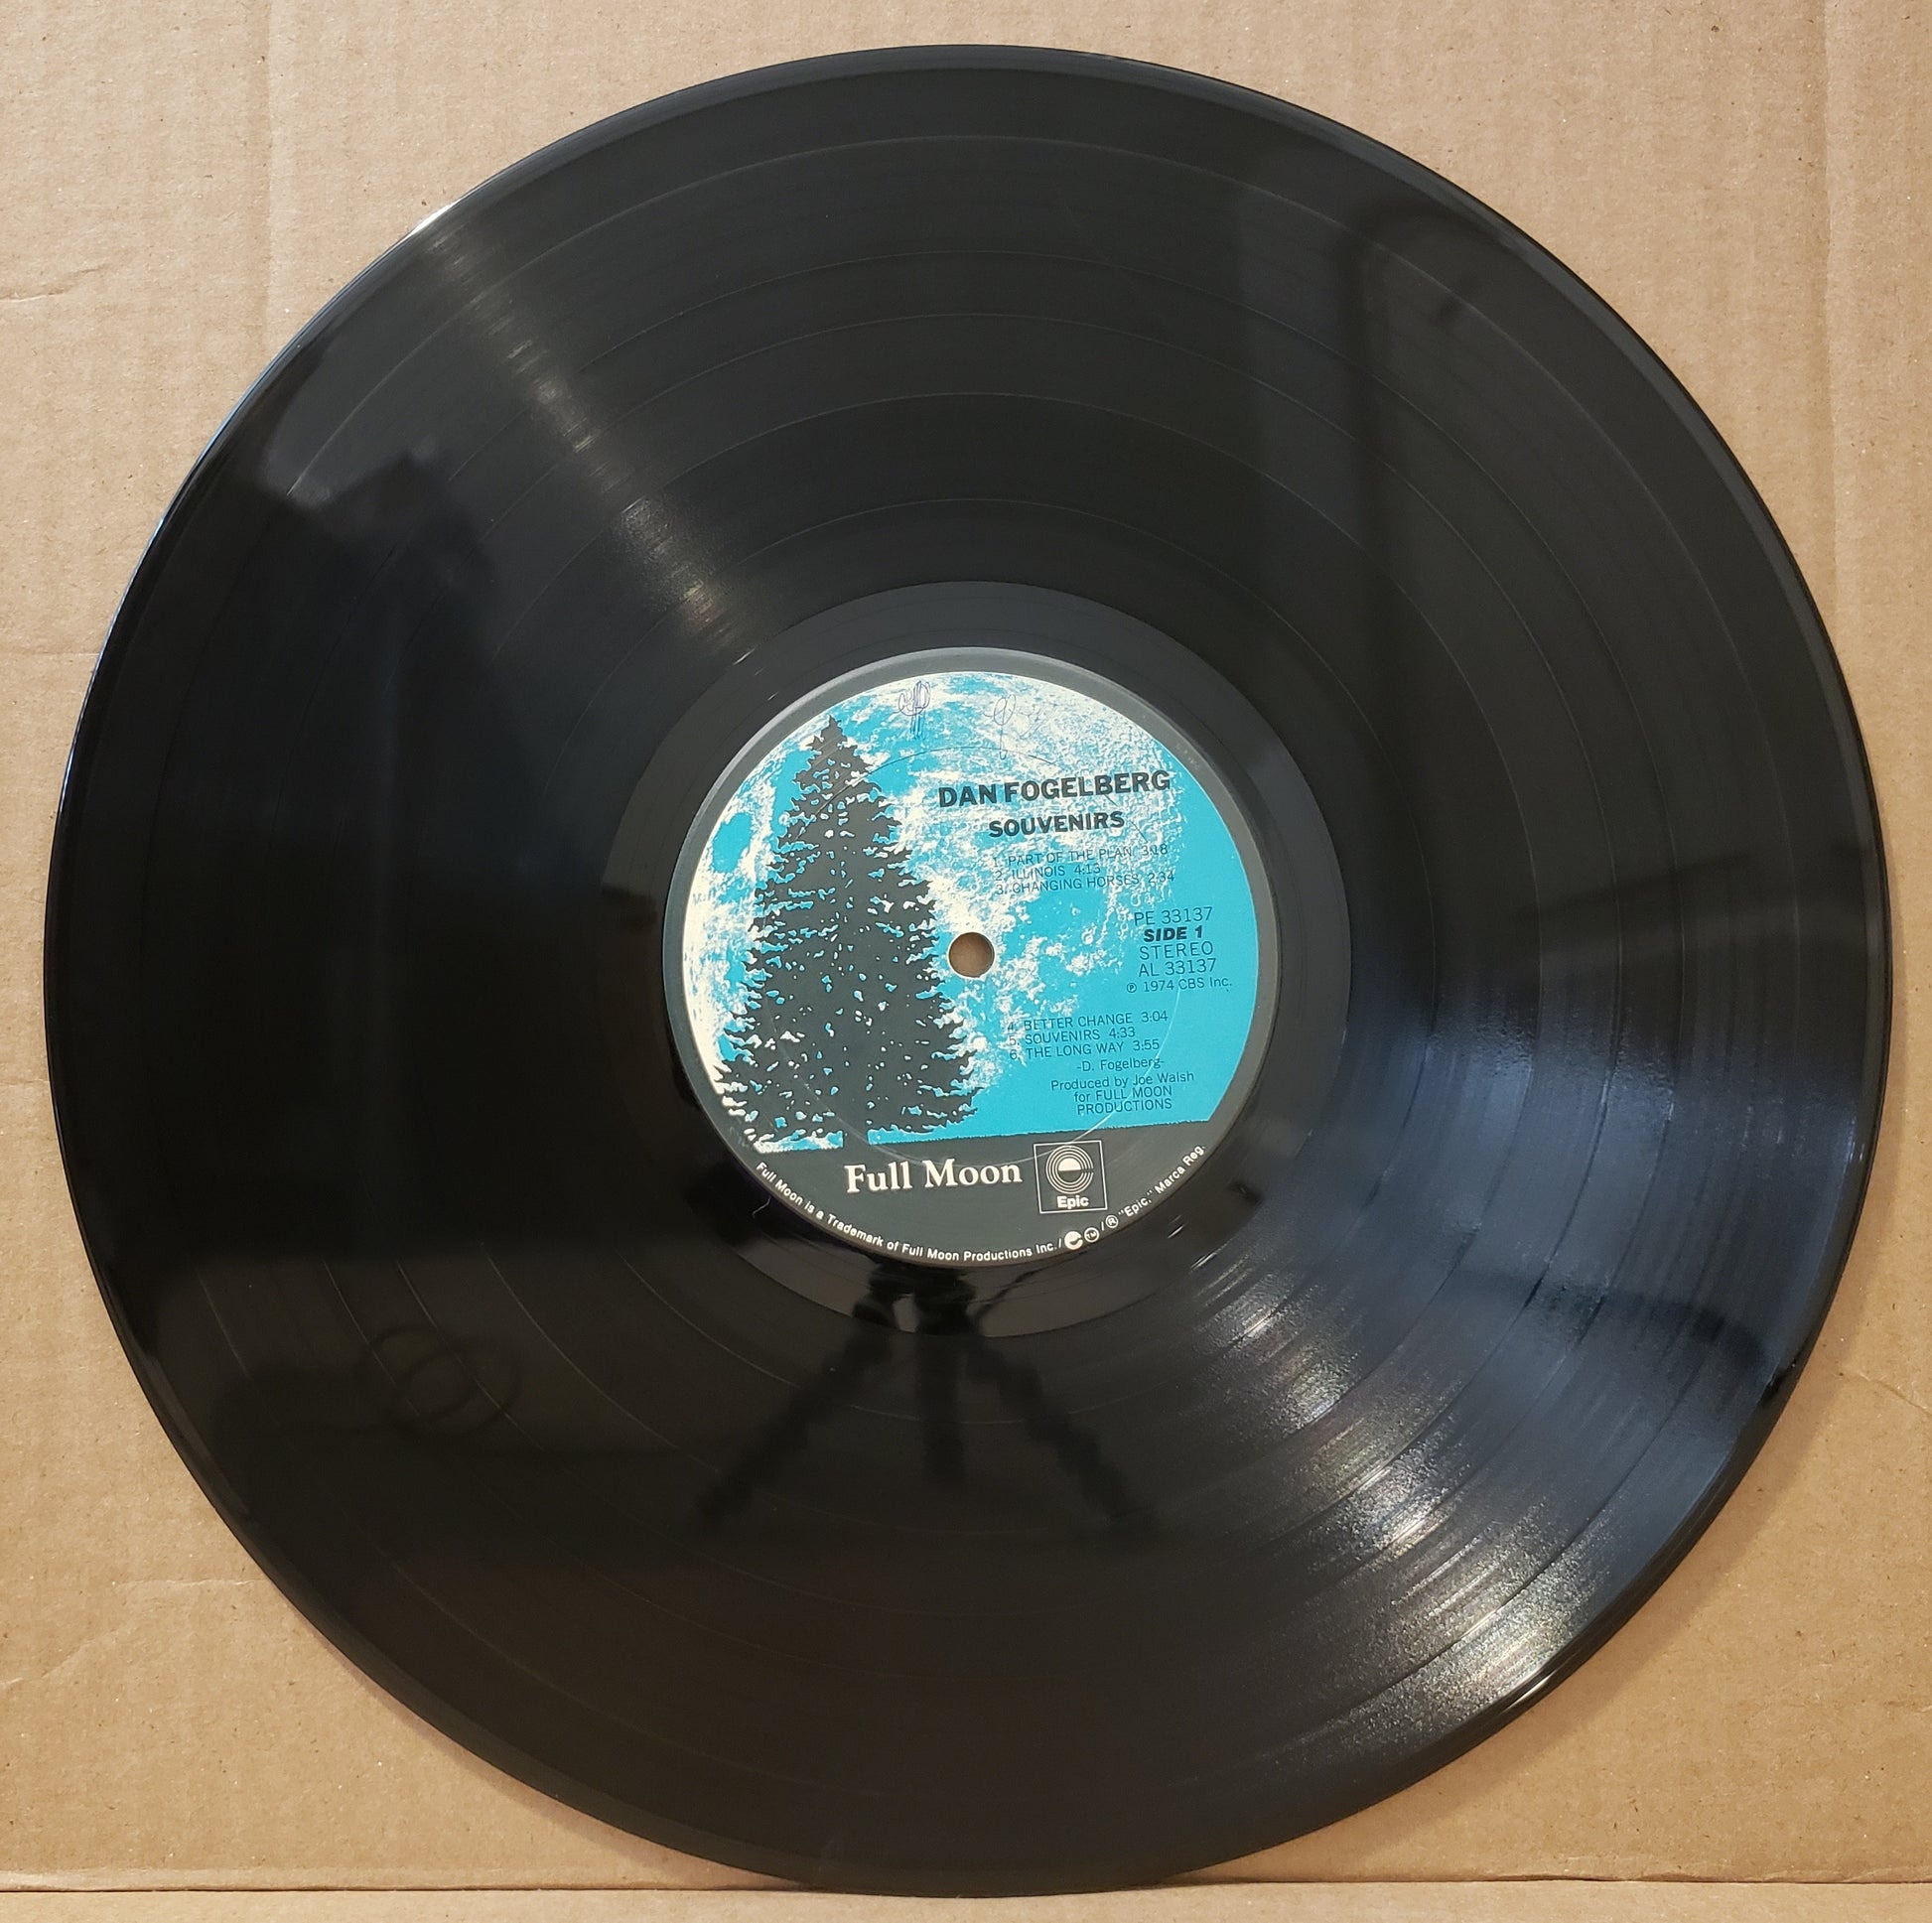 Dan Fogelberg - Souvenirs [1979 Reissue Pitman Pressing] [Used Vinyl Record LP]